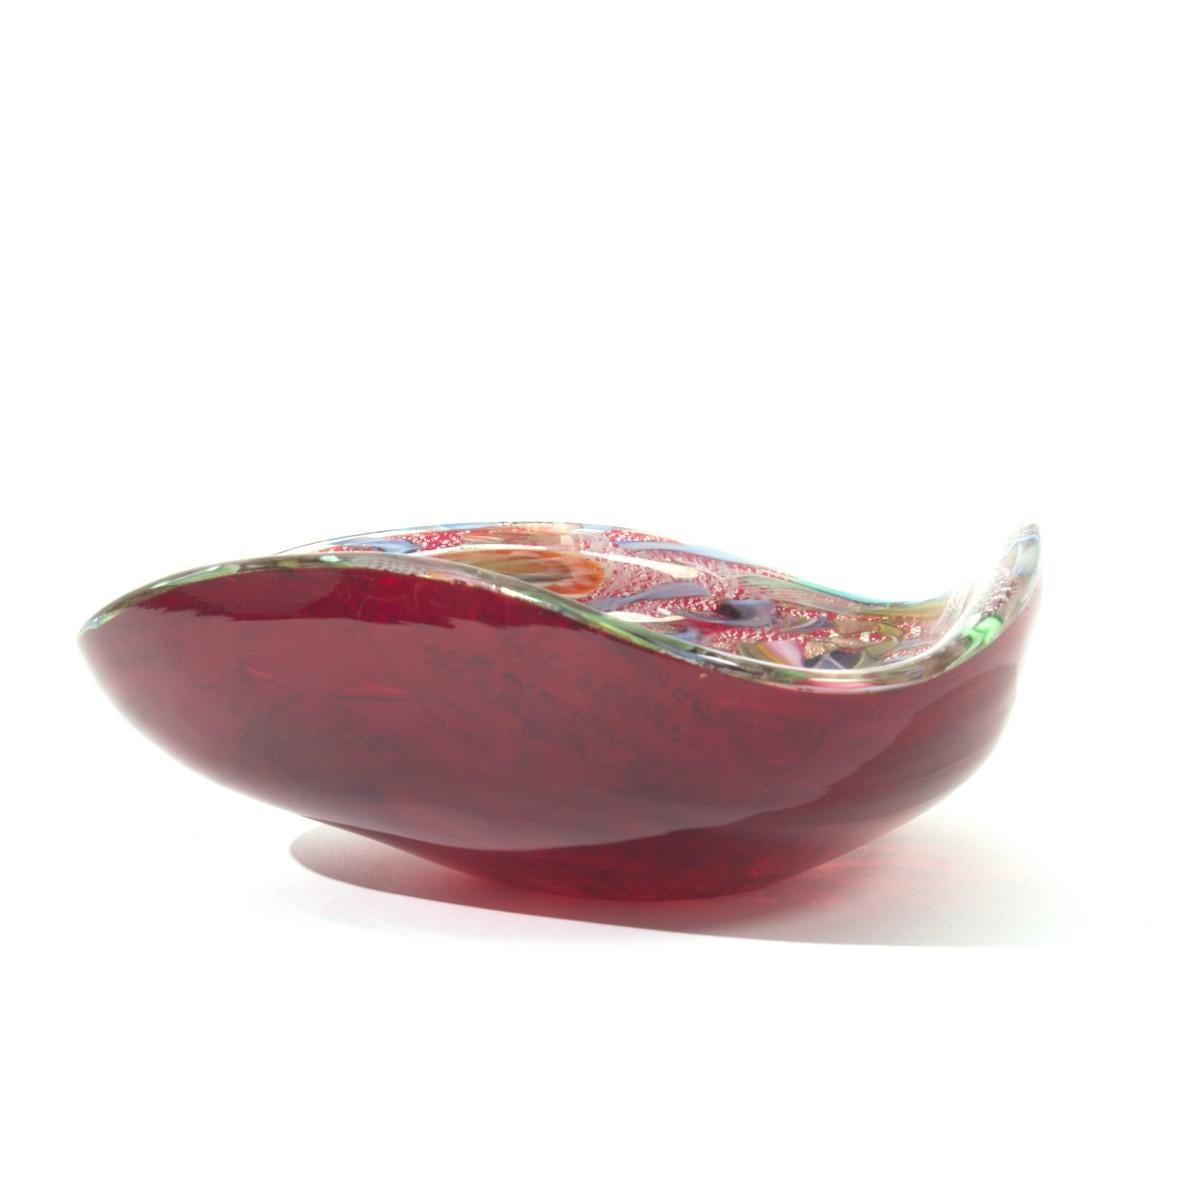 Avem artistic blown Murano glass bowl with aventurine & silver, circa 1950.